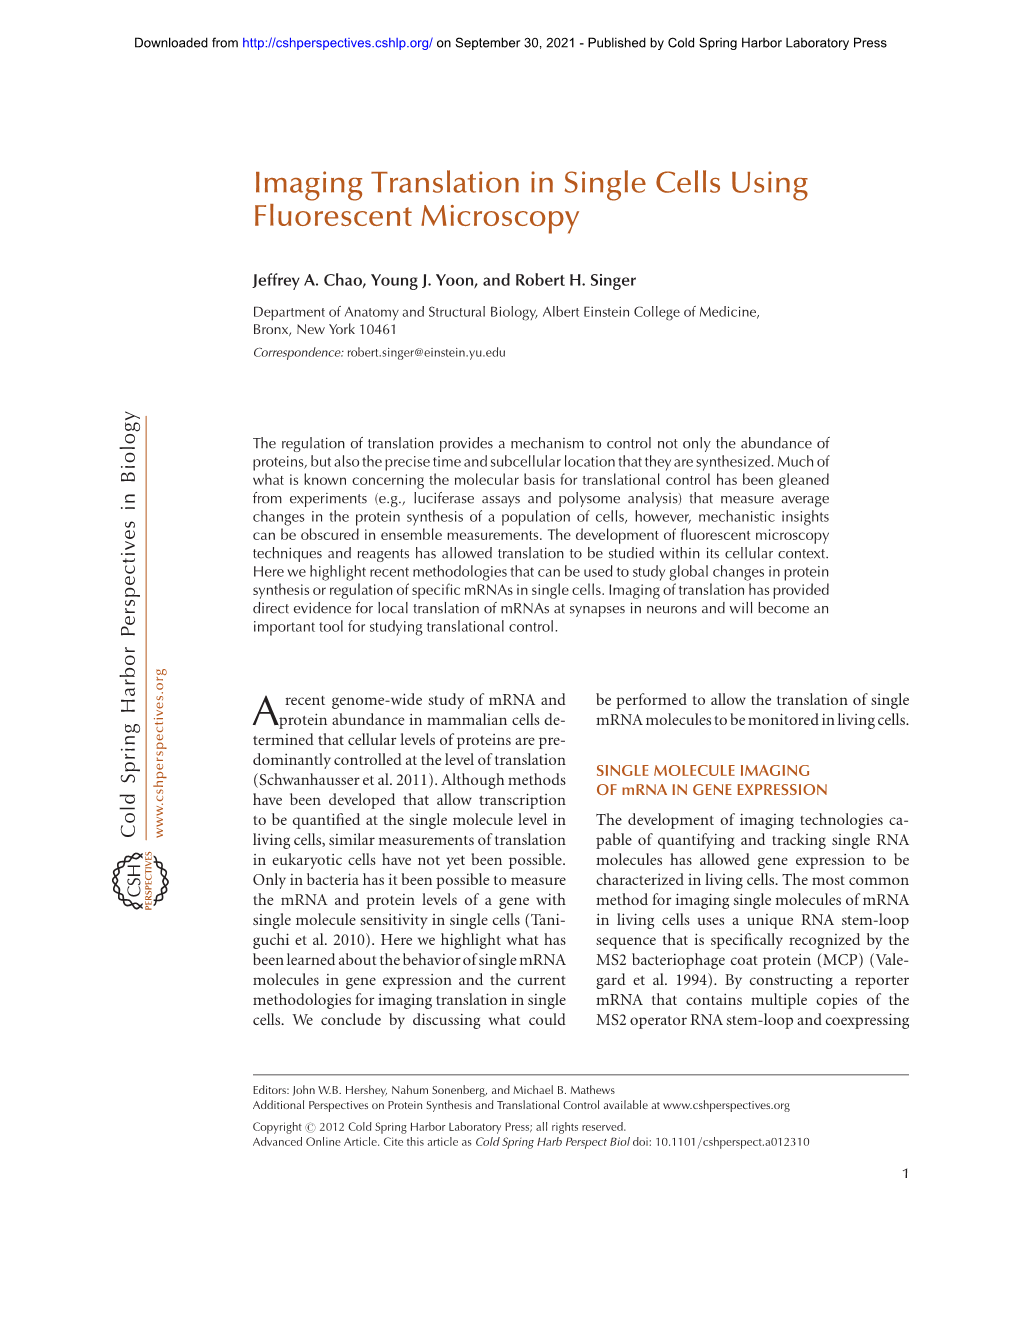 Imaging Translation in Single Cells Using Fluorescent Microscopy